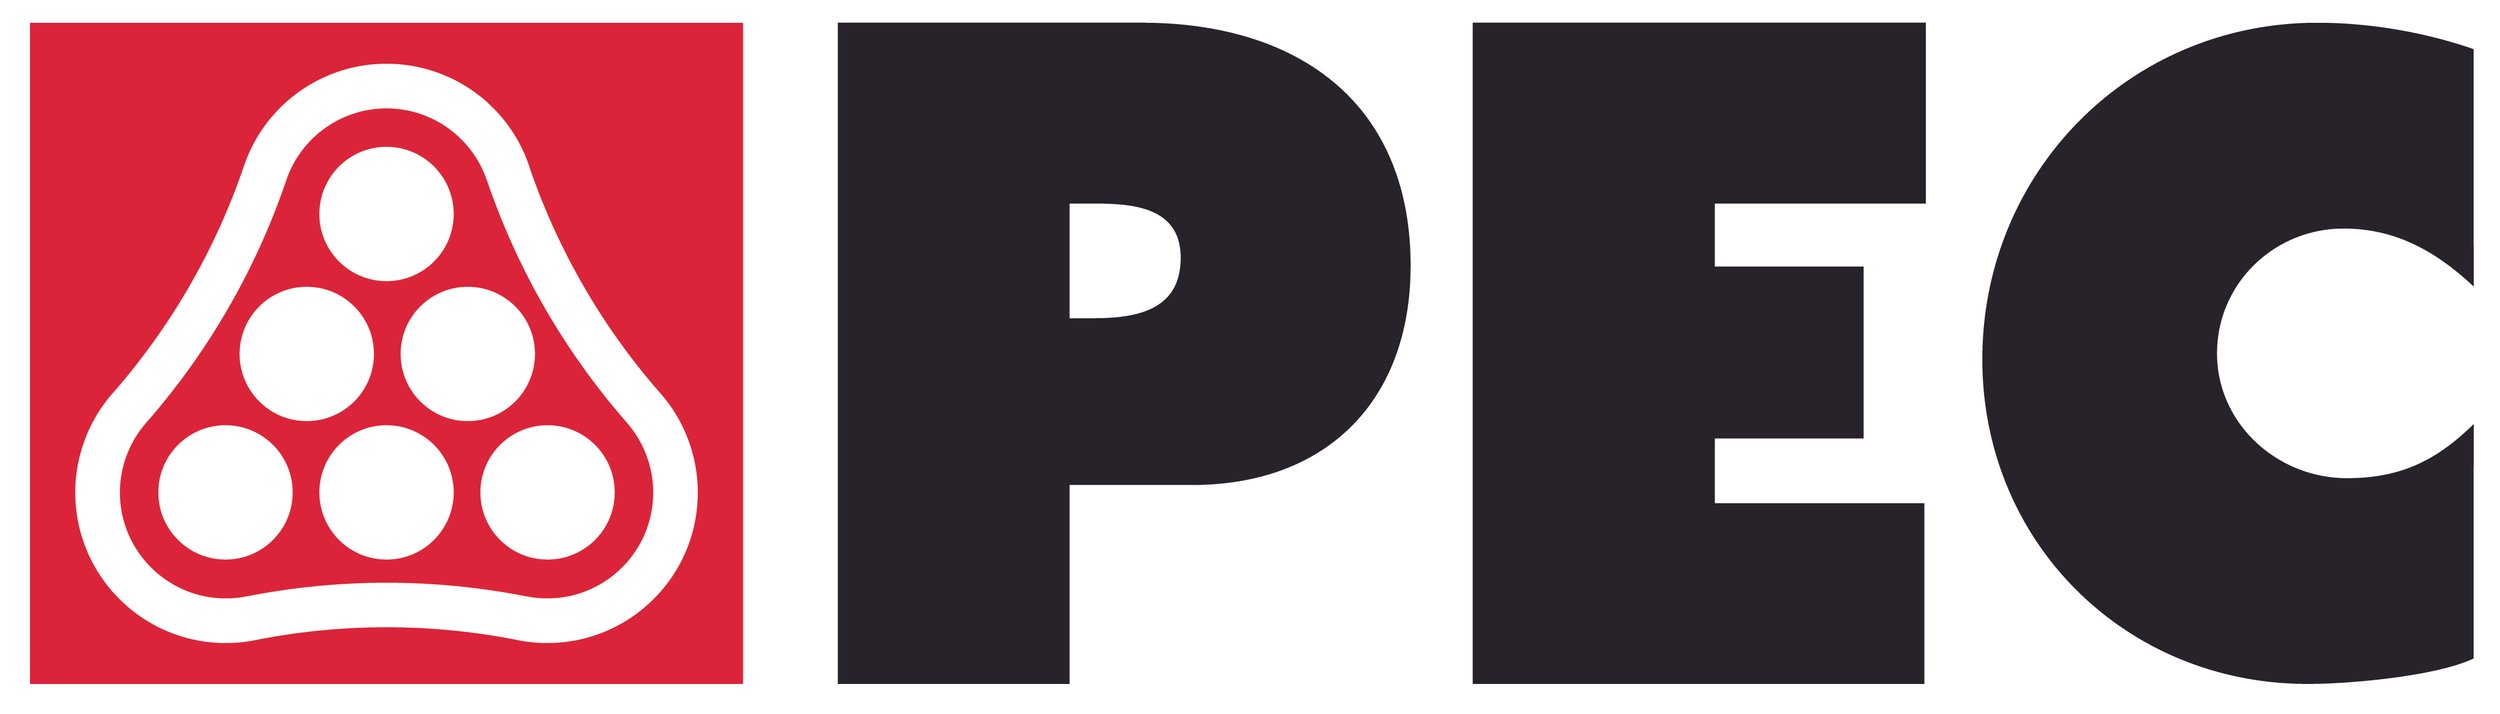 PEC_Large Logo Primary.jpg